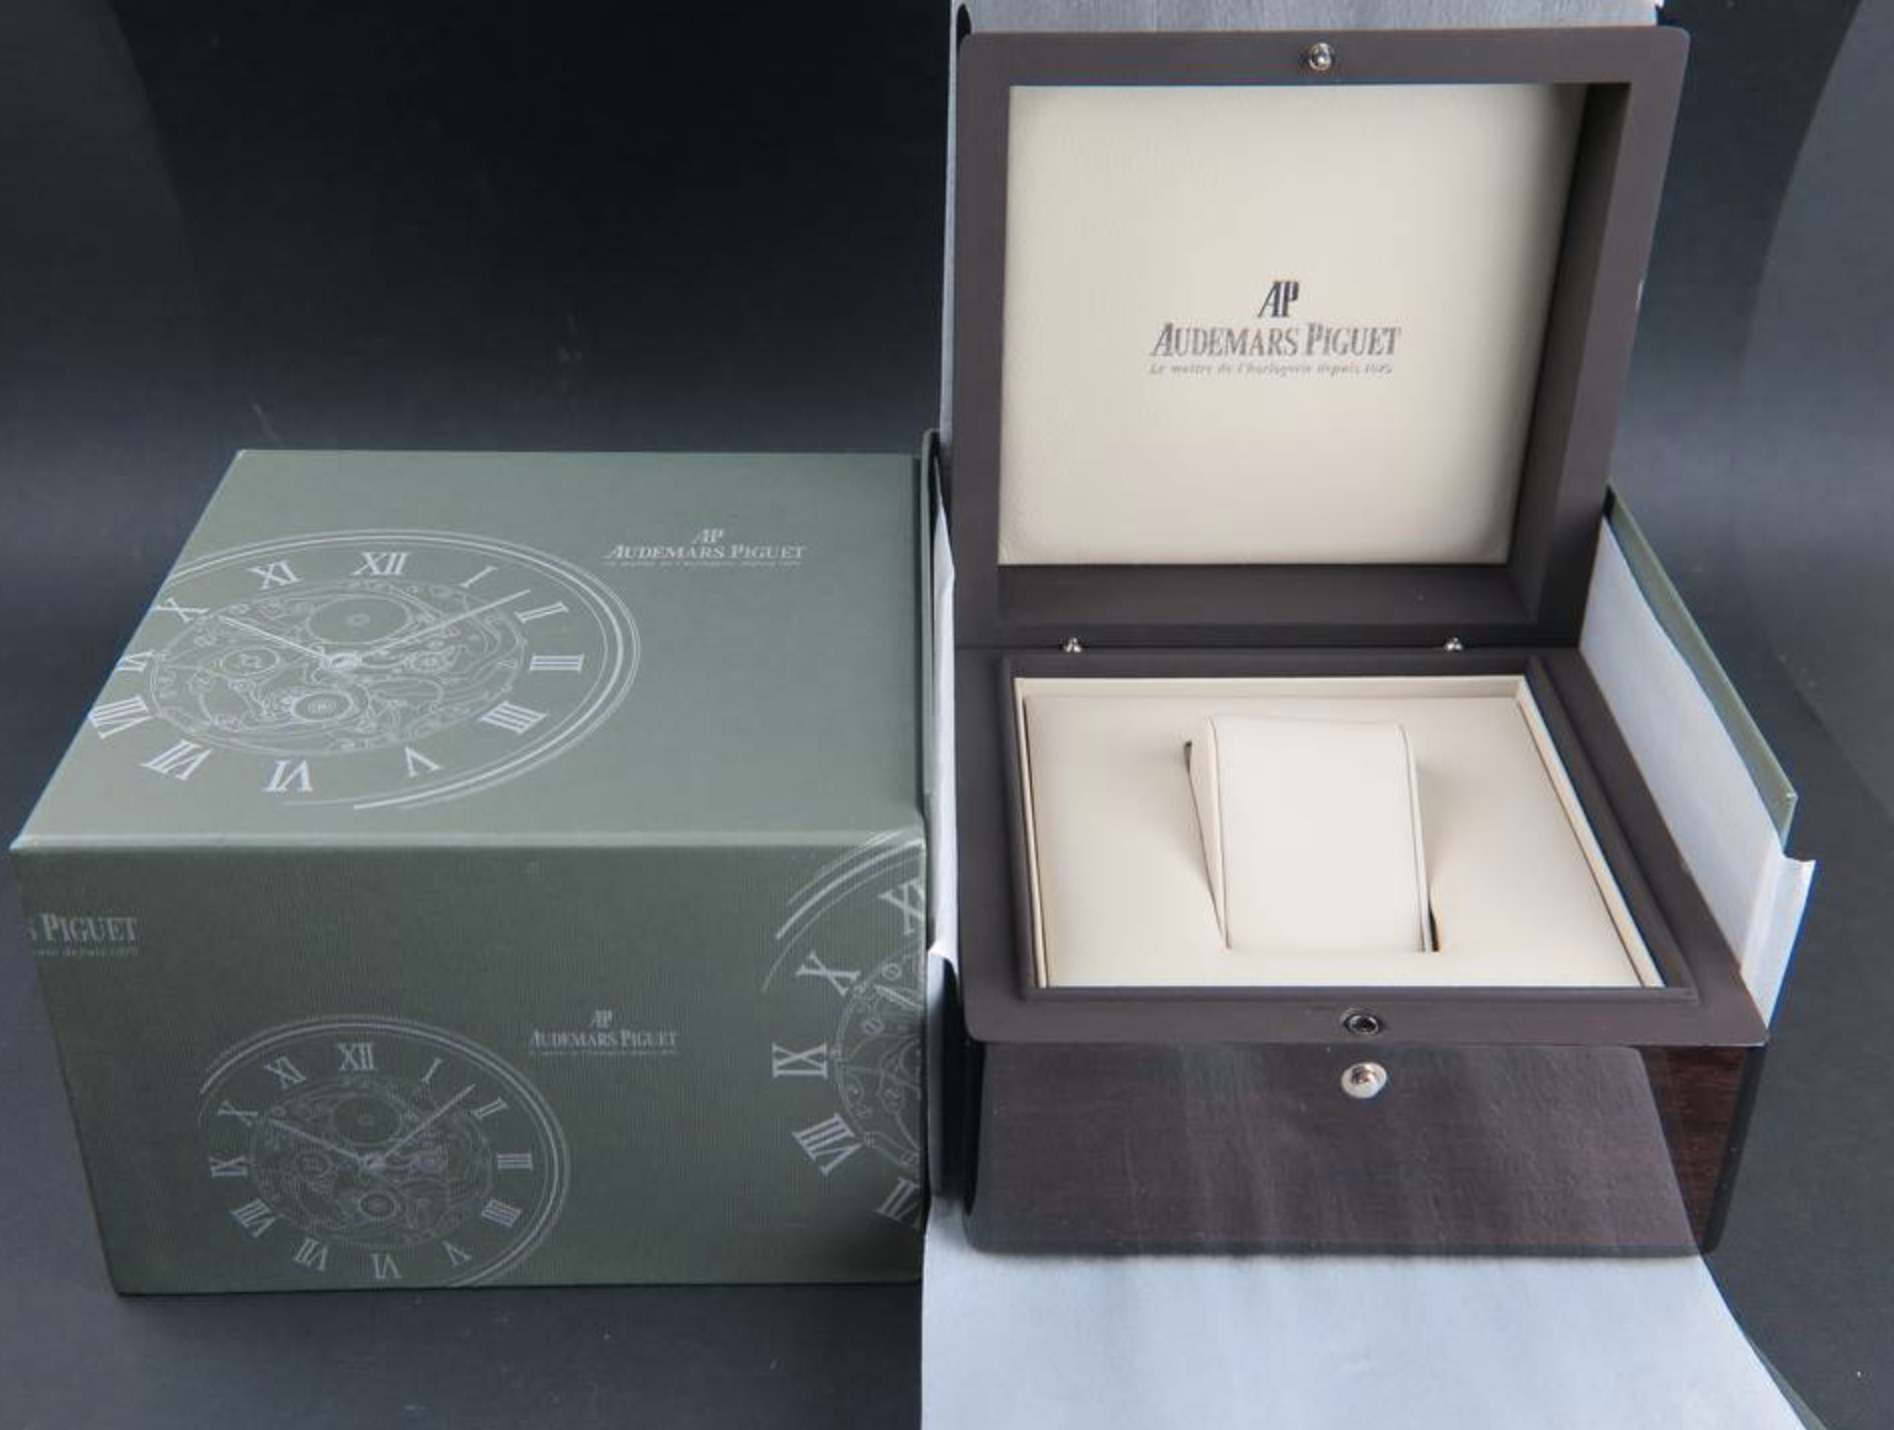 Best Swiss Clone Replica Royal Oak - Silver/White Chronograph - Replica Swiss Clones Watches